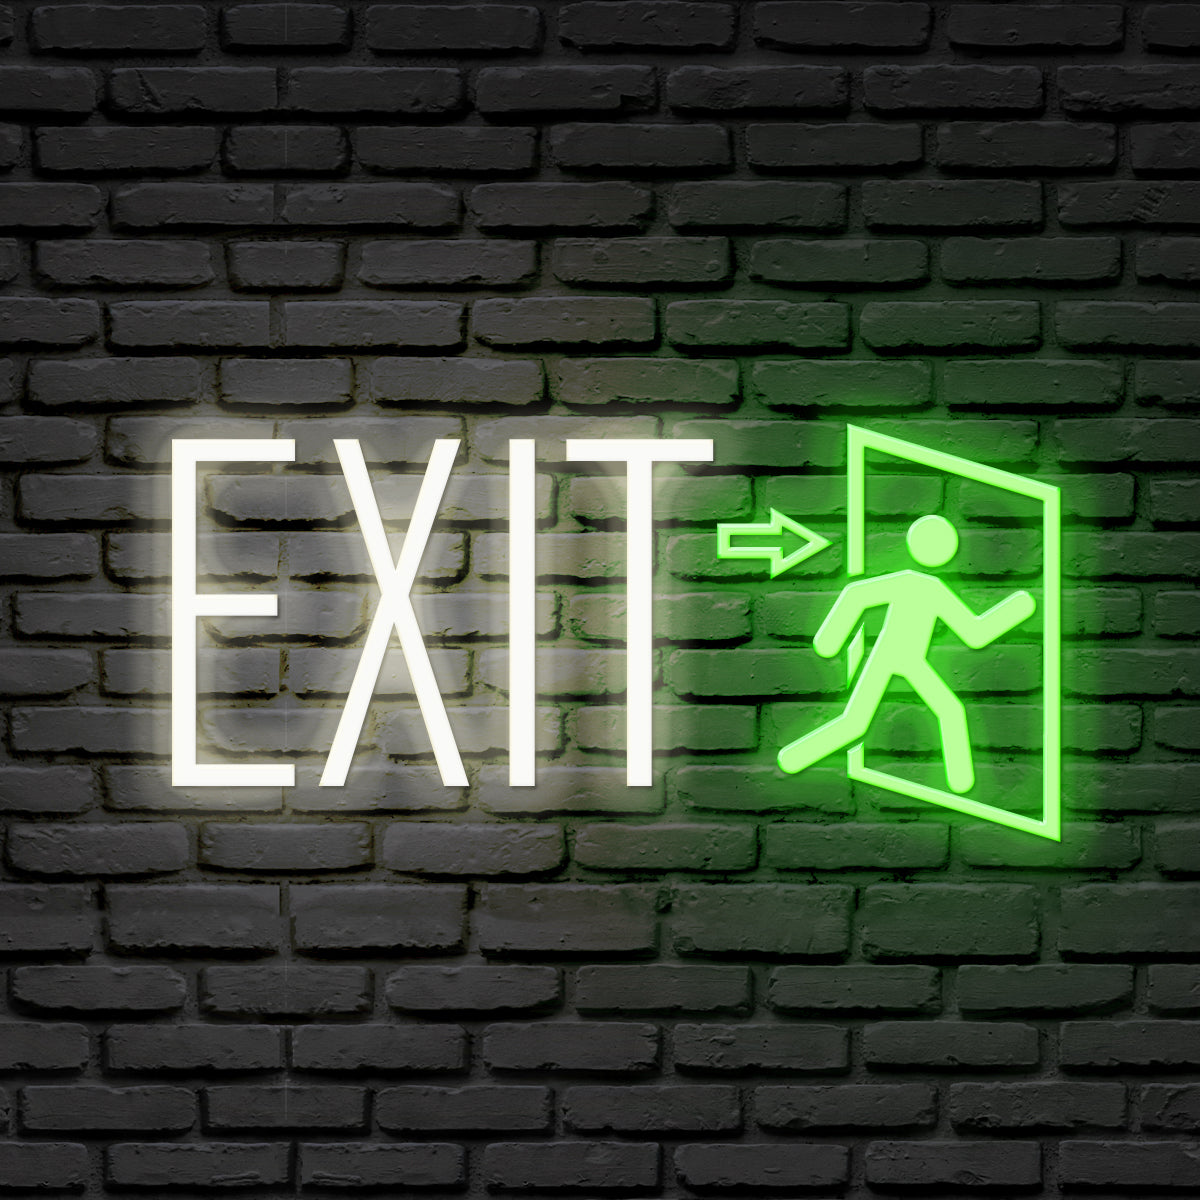 Exit sign neon